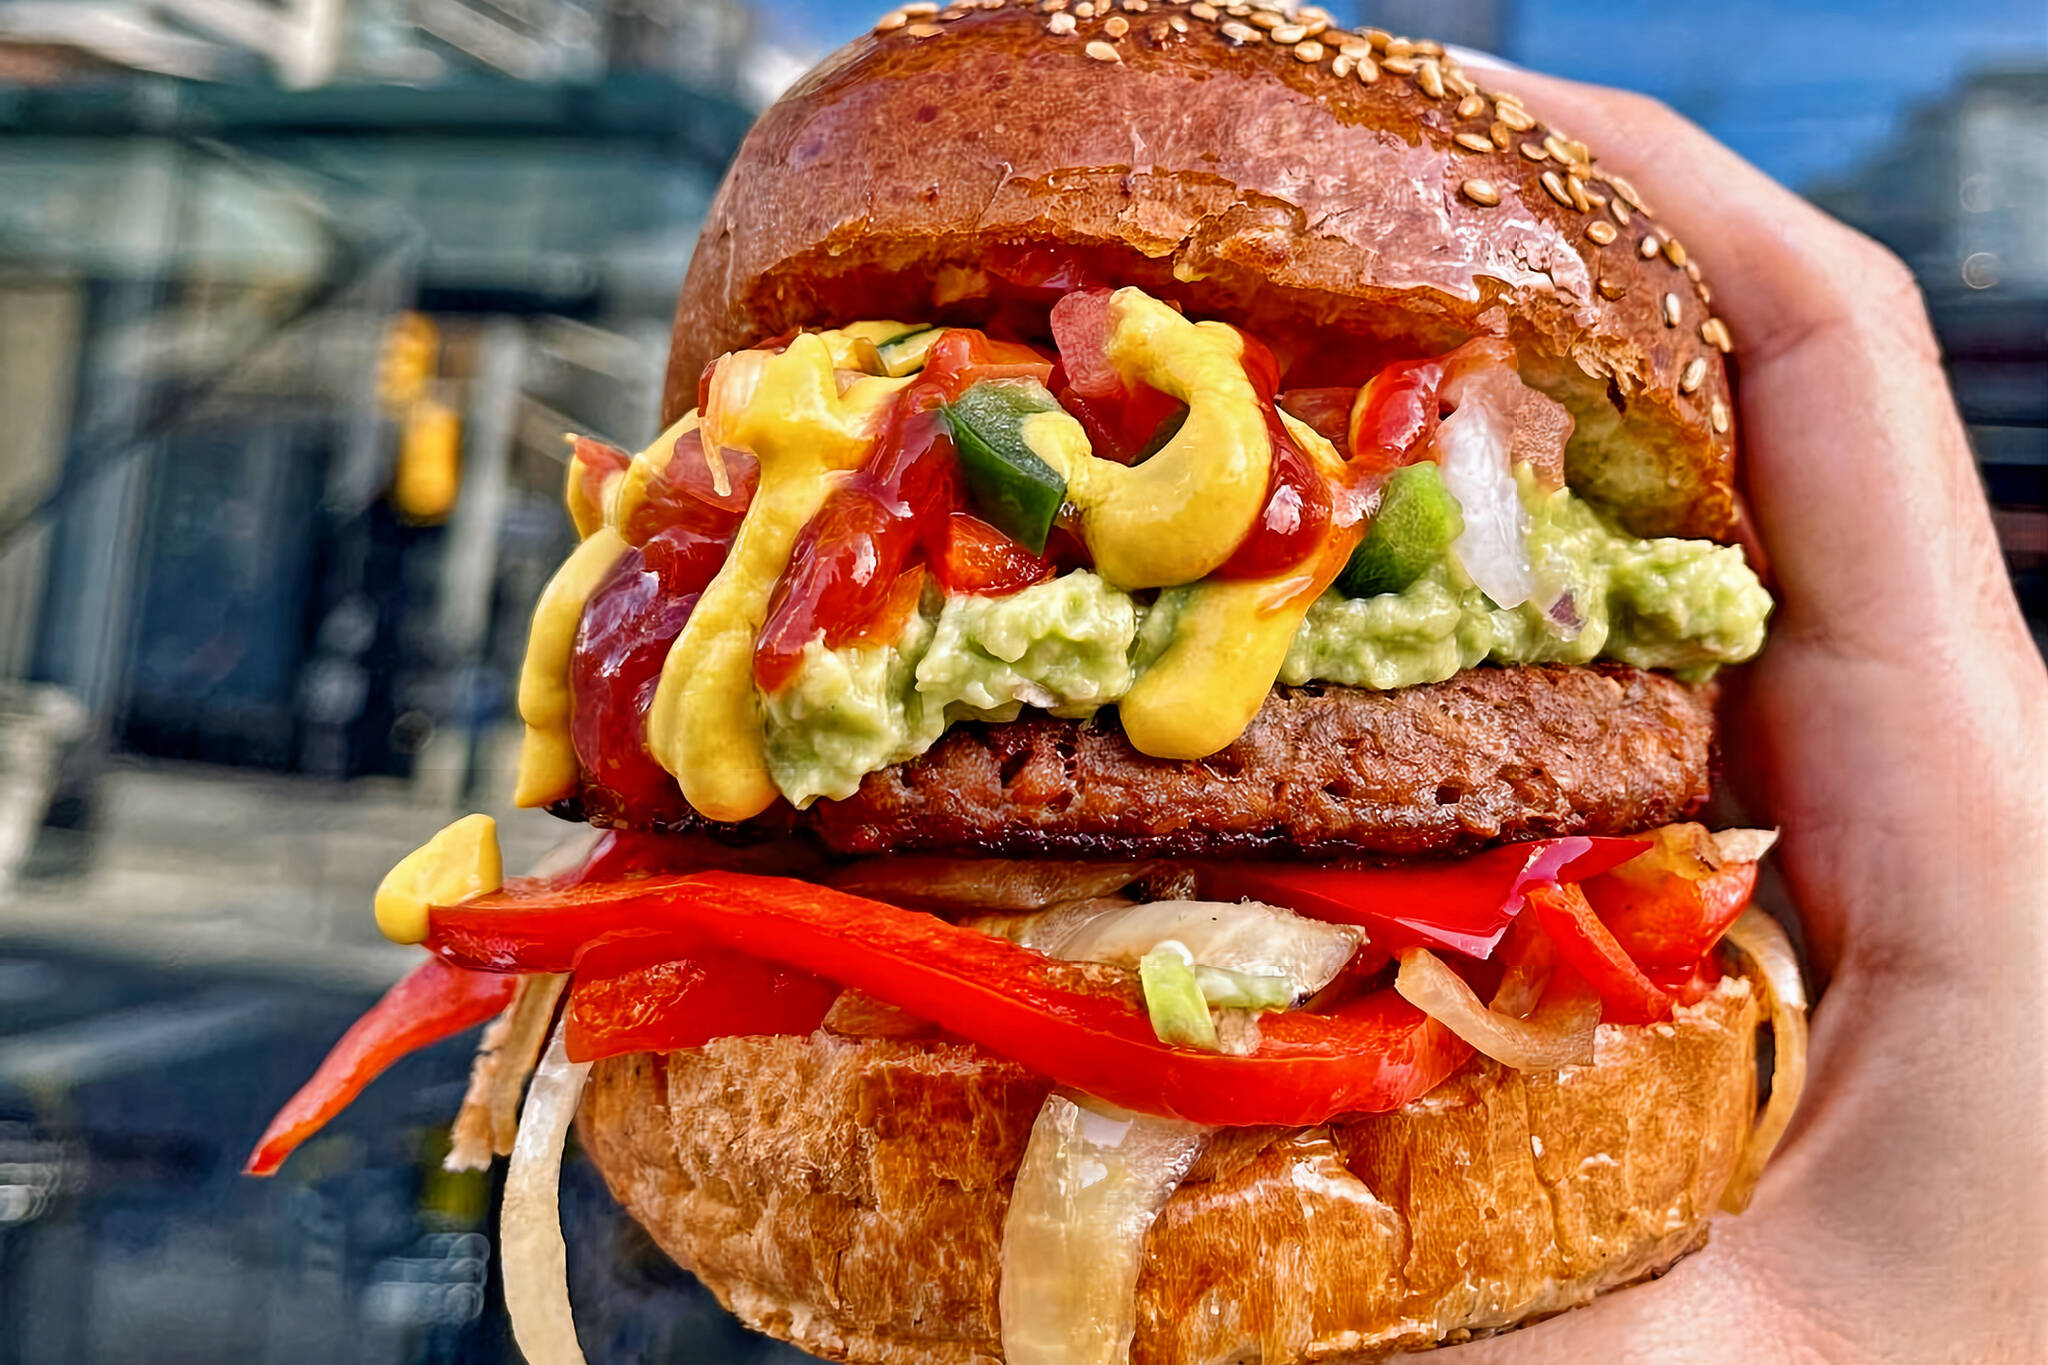 Vegan-friendly burger joints